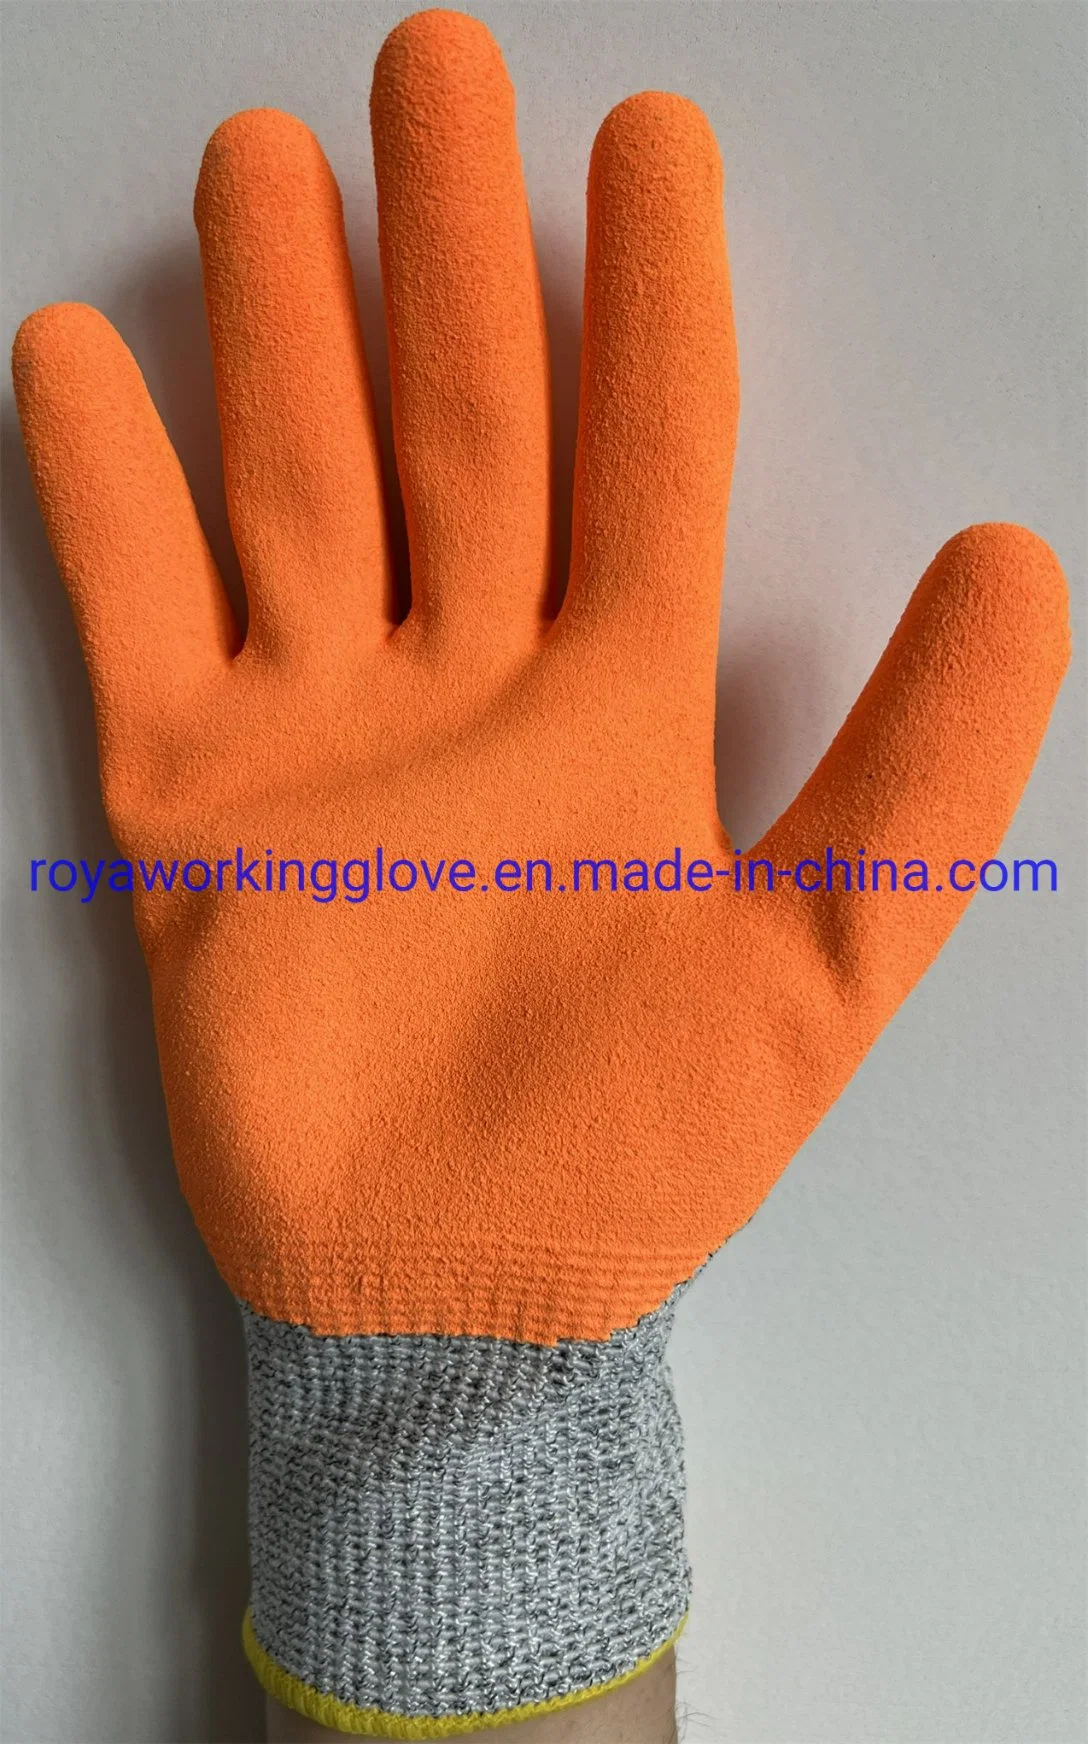 Hppe Cut Reistance Gloves/Anti-Cutting Gloves /Handling Metal Gloves /Handling Glass Gloves /Anti Cutting Gloves